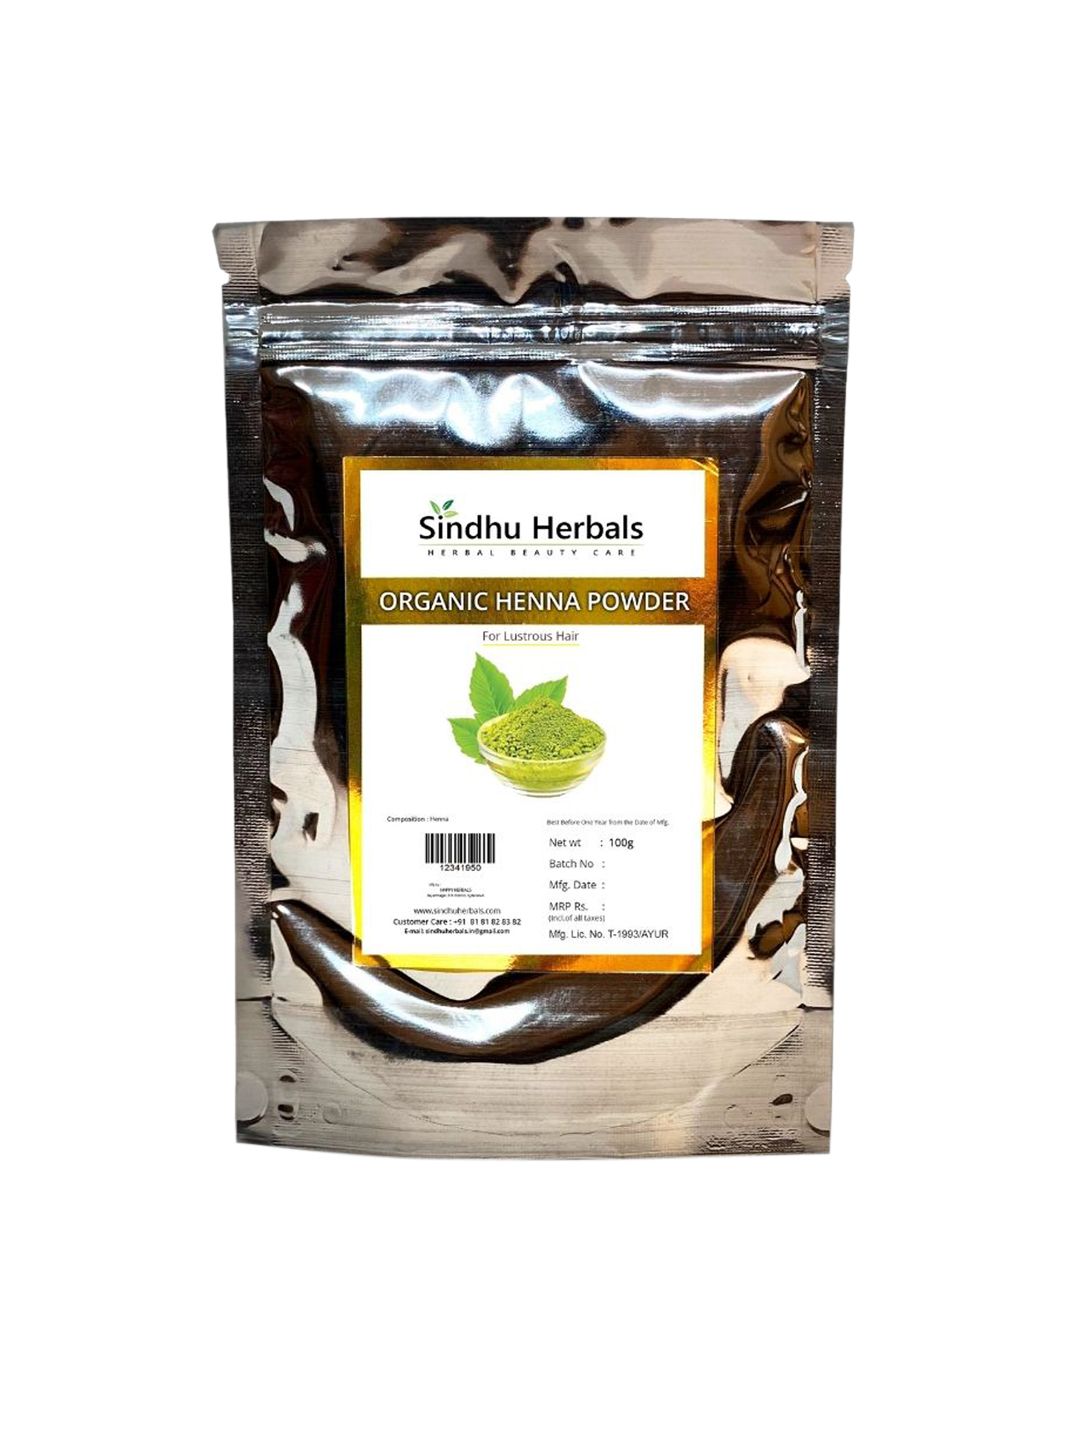 Sindhu Herbals Organic Henna Powder 100g Price in India